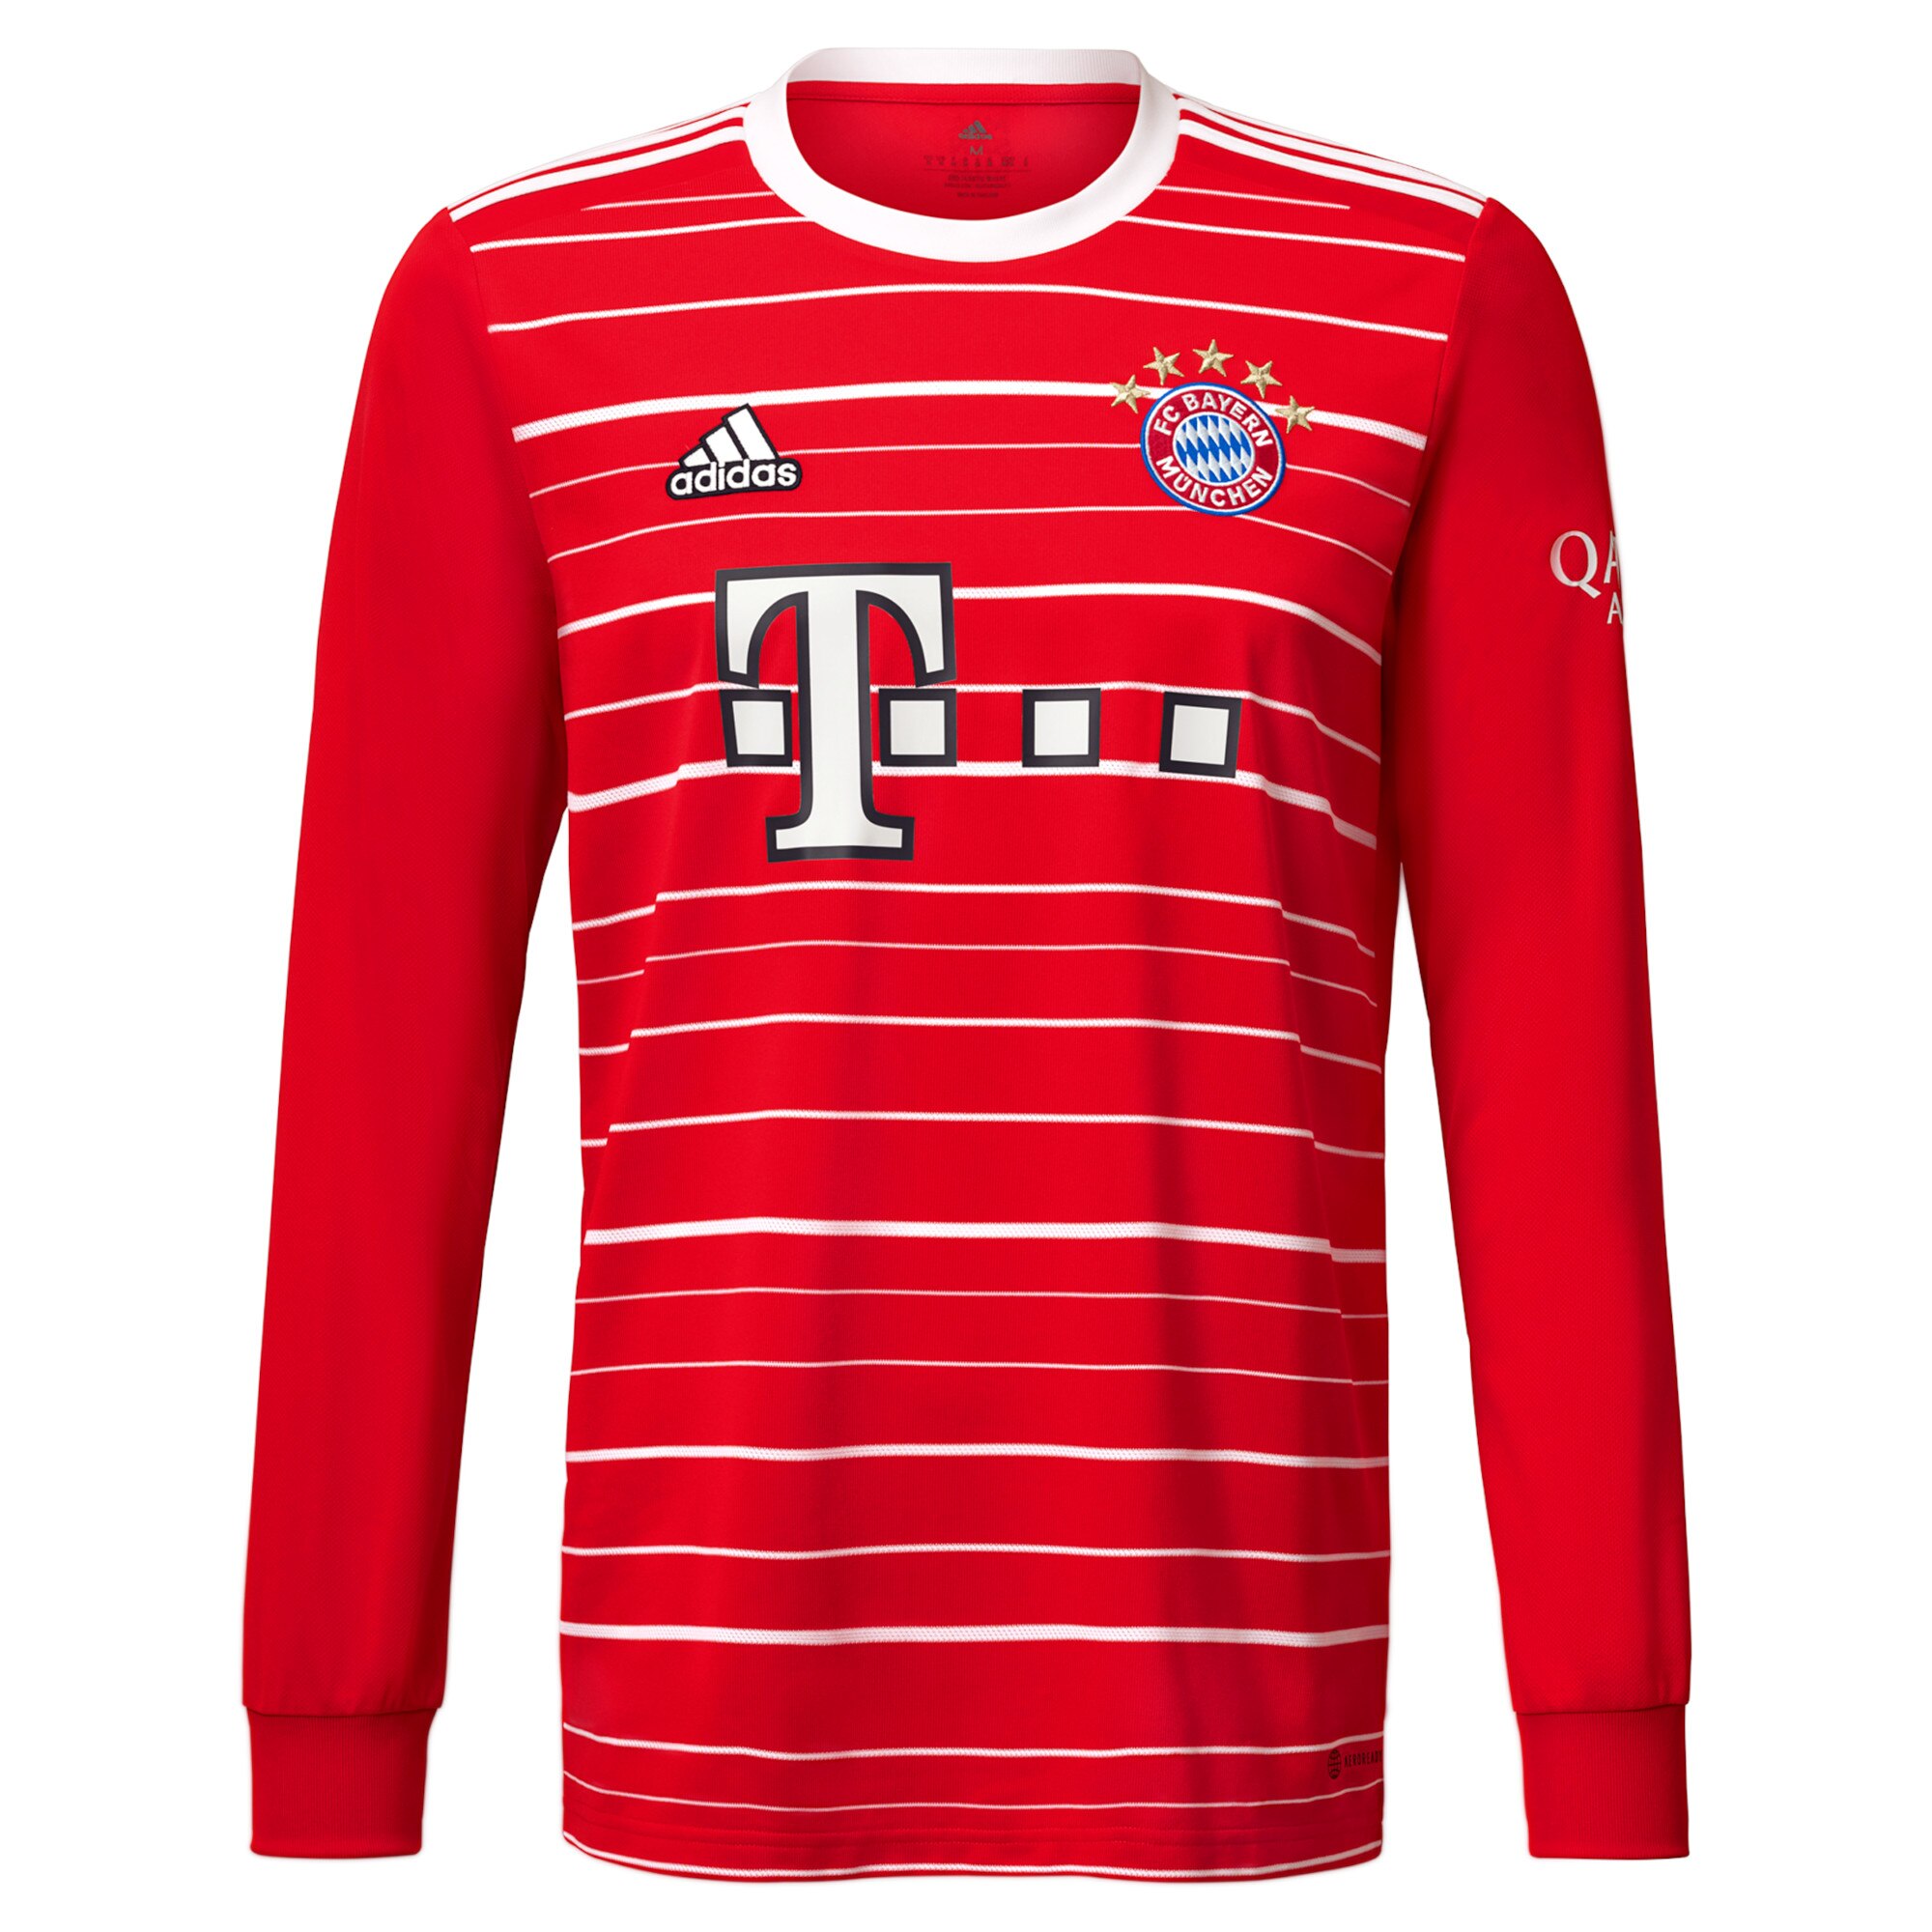 FC Bayern Home Shirt 2022-23 - Long Sleeve with Nianzou 23 printing